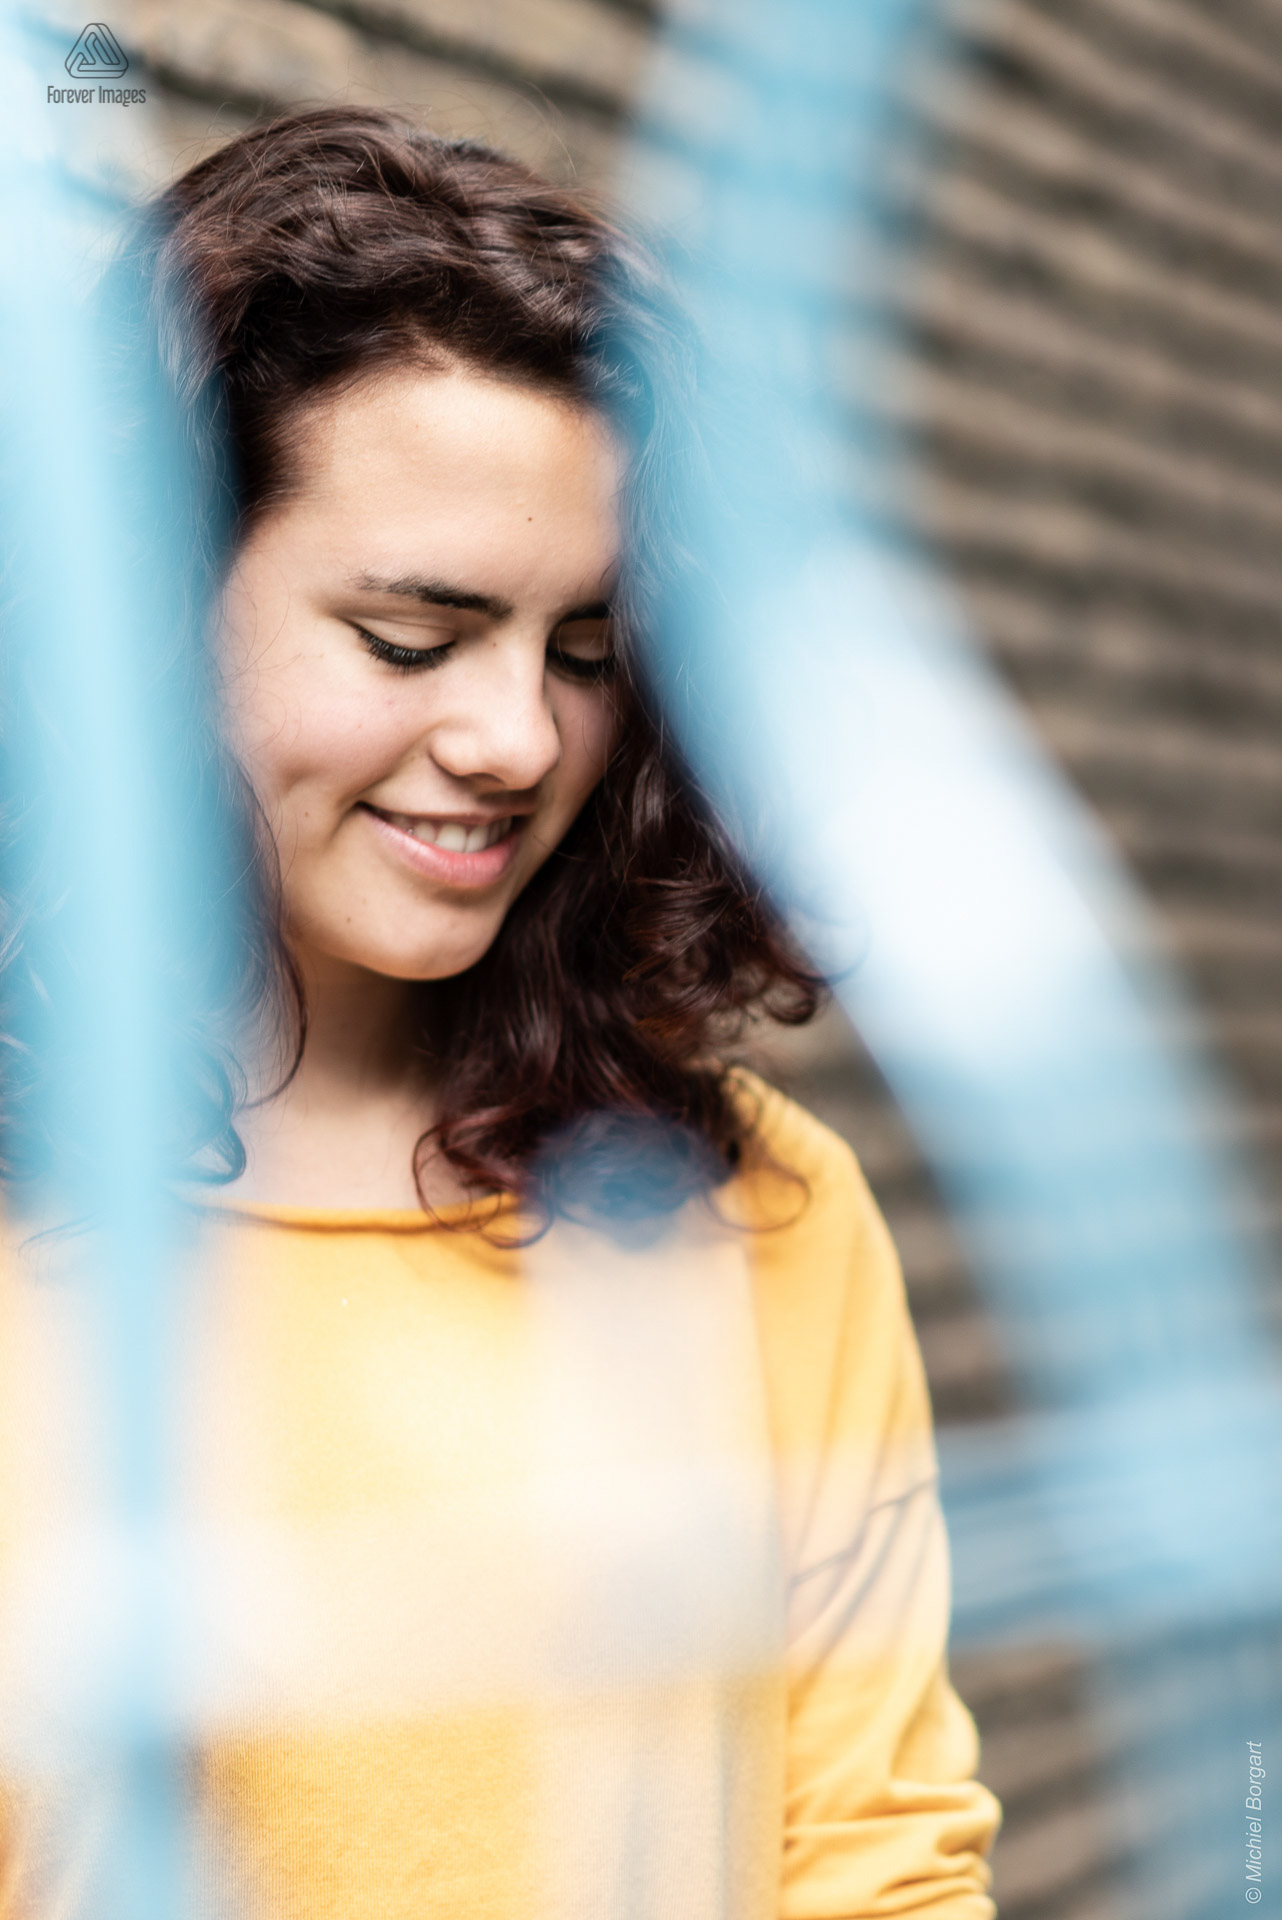 Portrait photo young lady against wall behind blue fence soft smile | Tessa | Portrait Photographer Michiel Borgart - Forever Images.